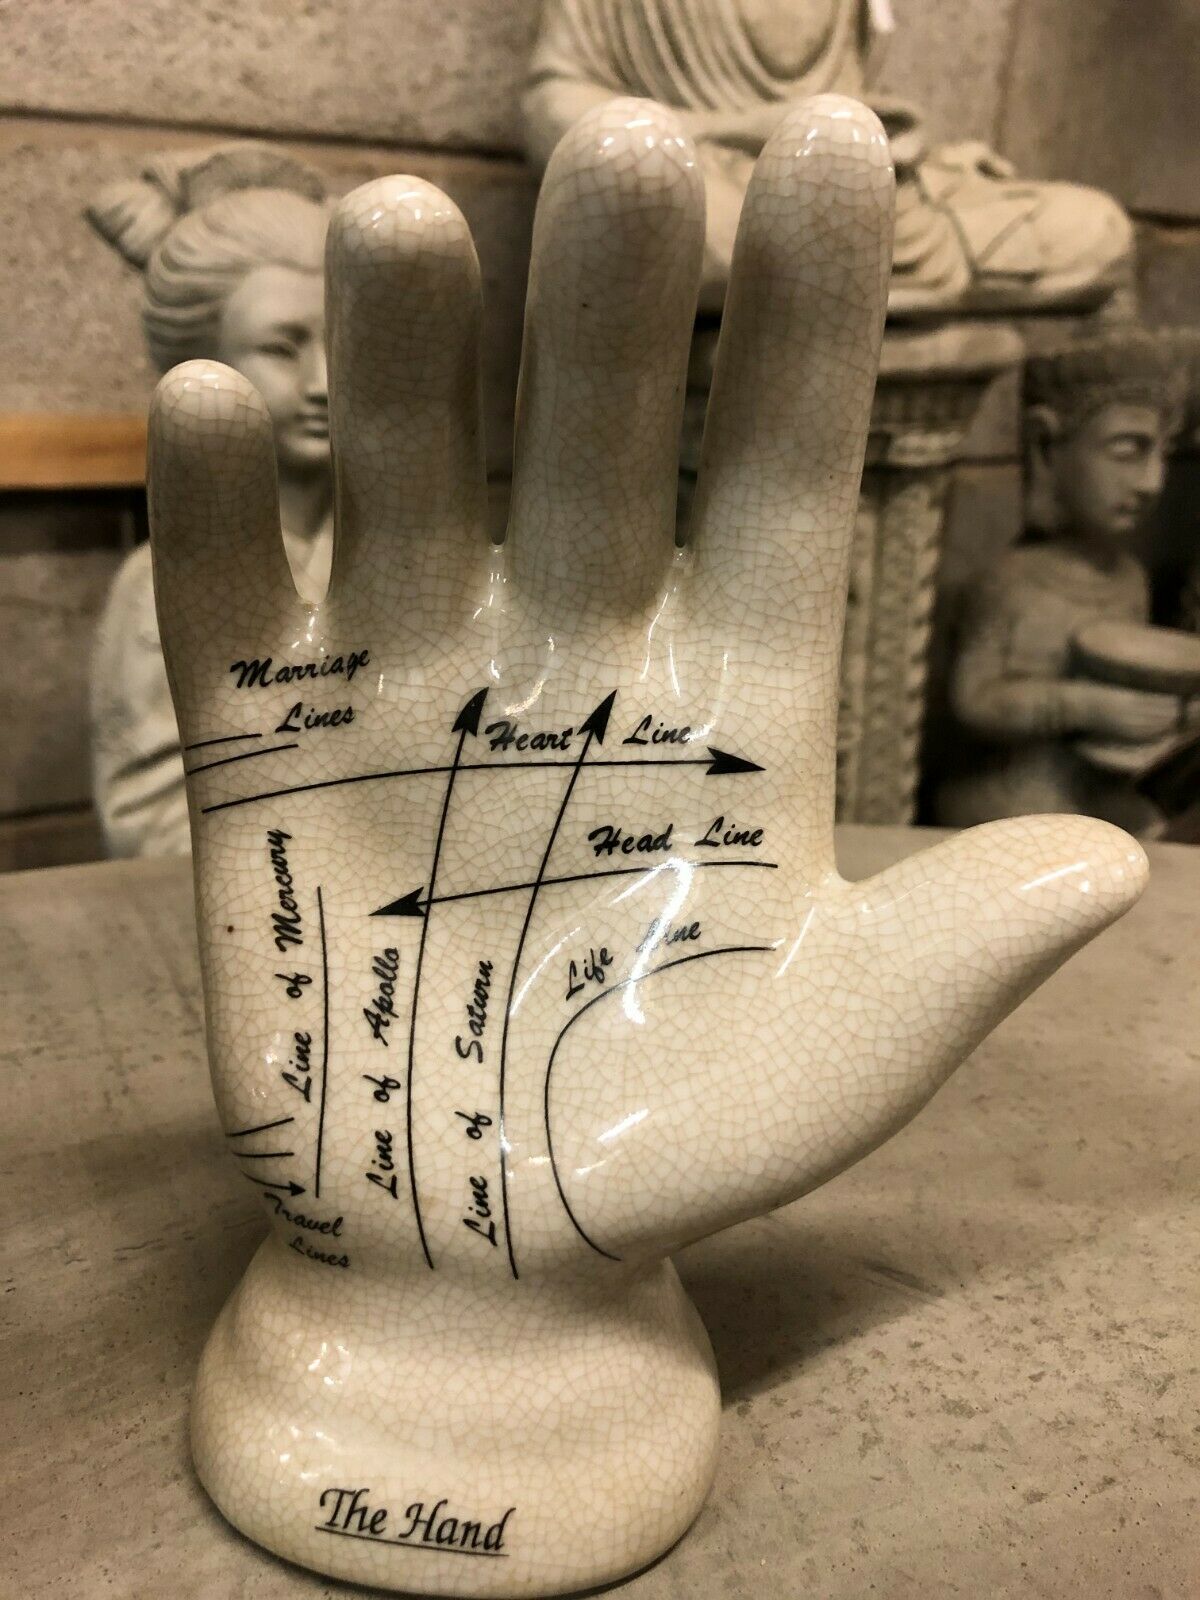 Ceramic Phrenology Head & Hand Ornaments